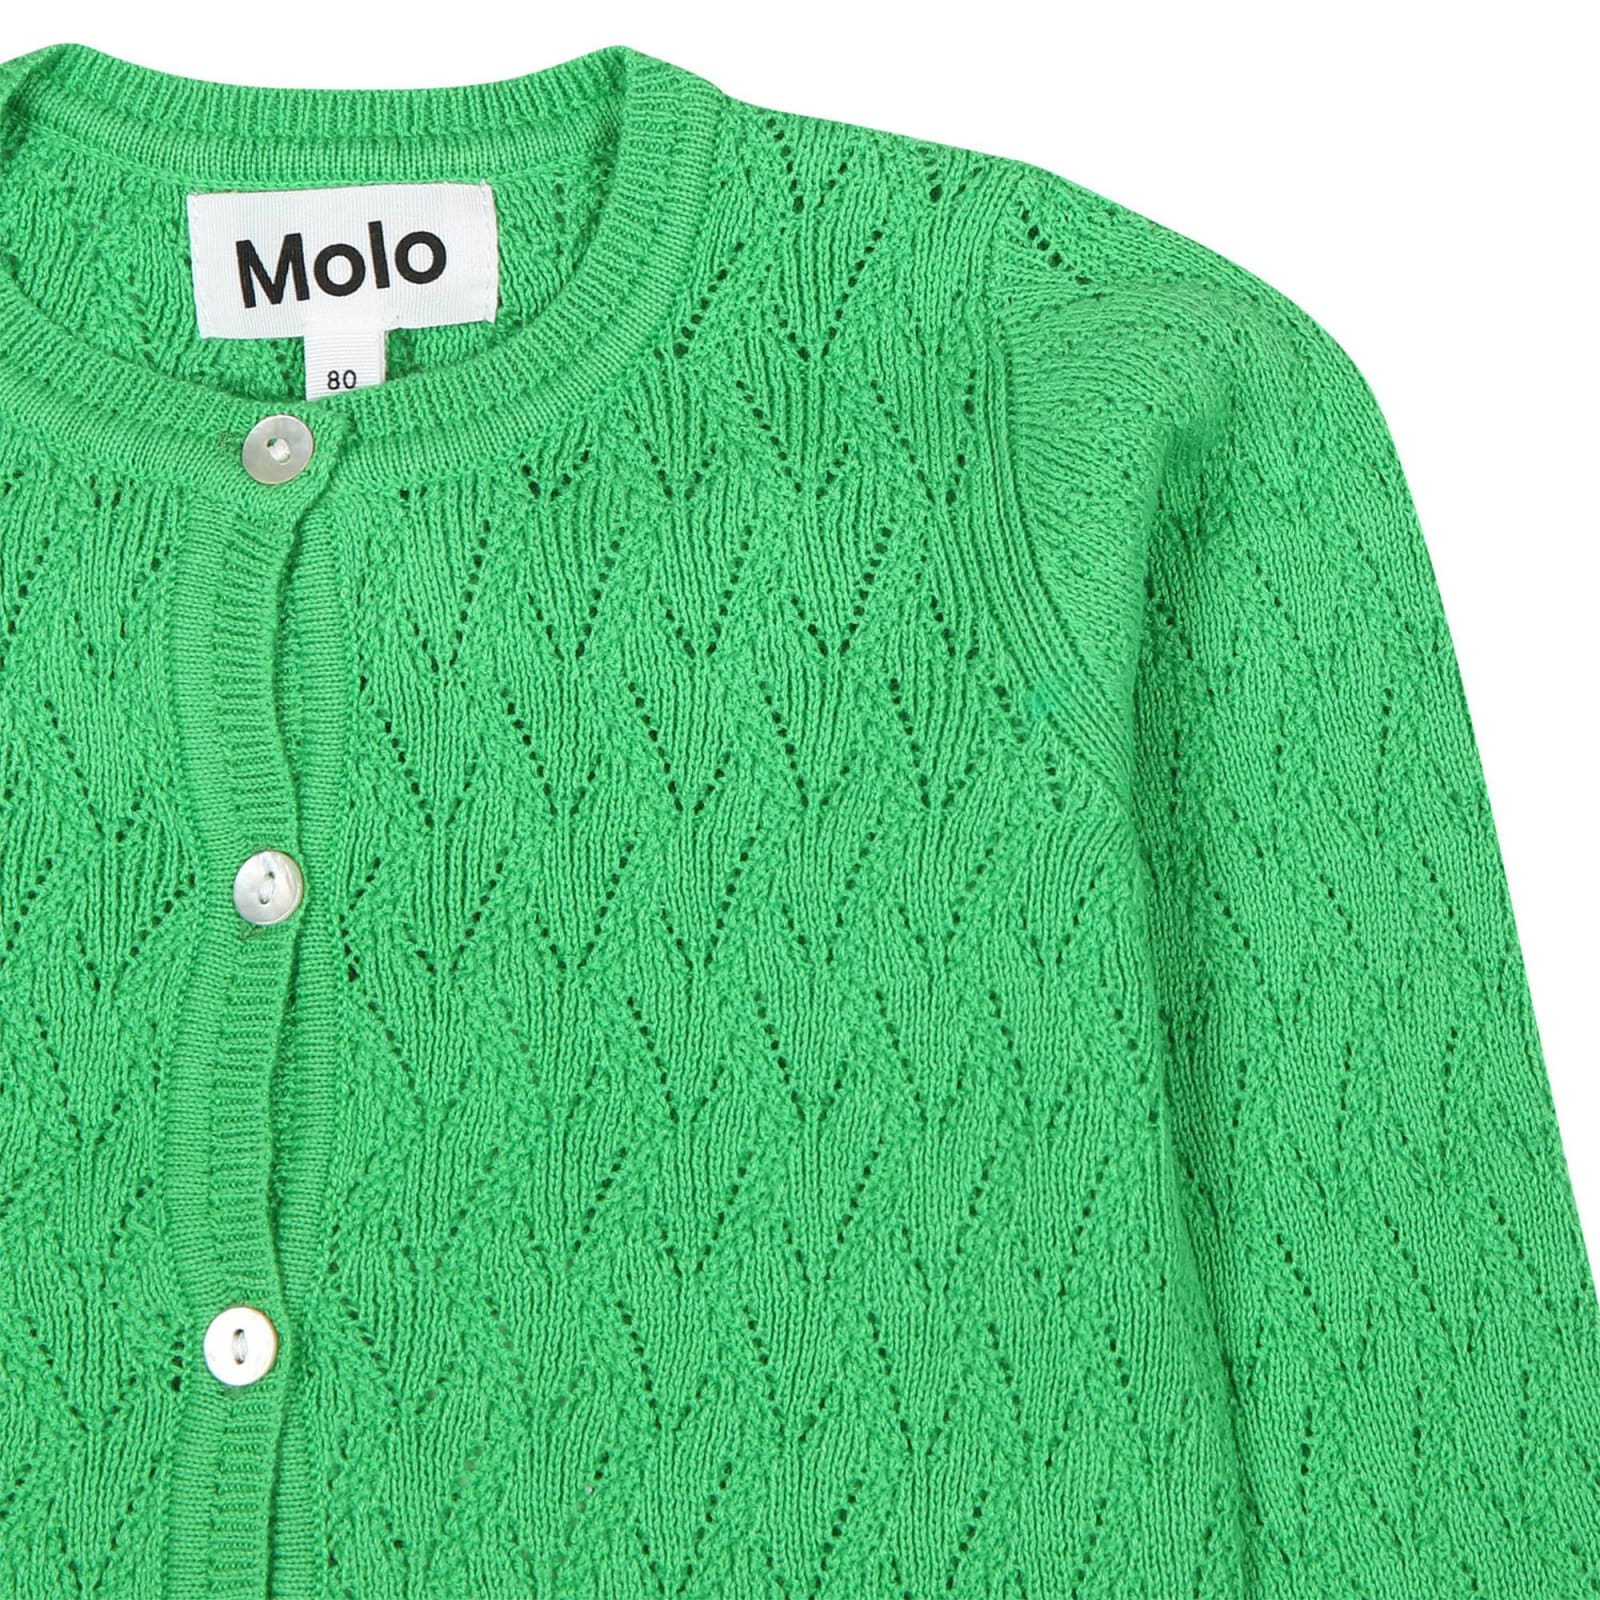 Shop Molo Green Cardigan For Baby Girl